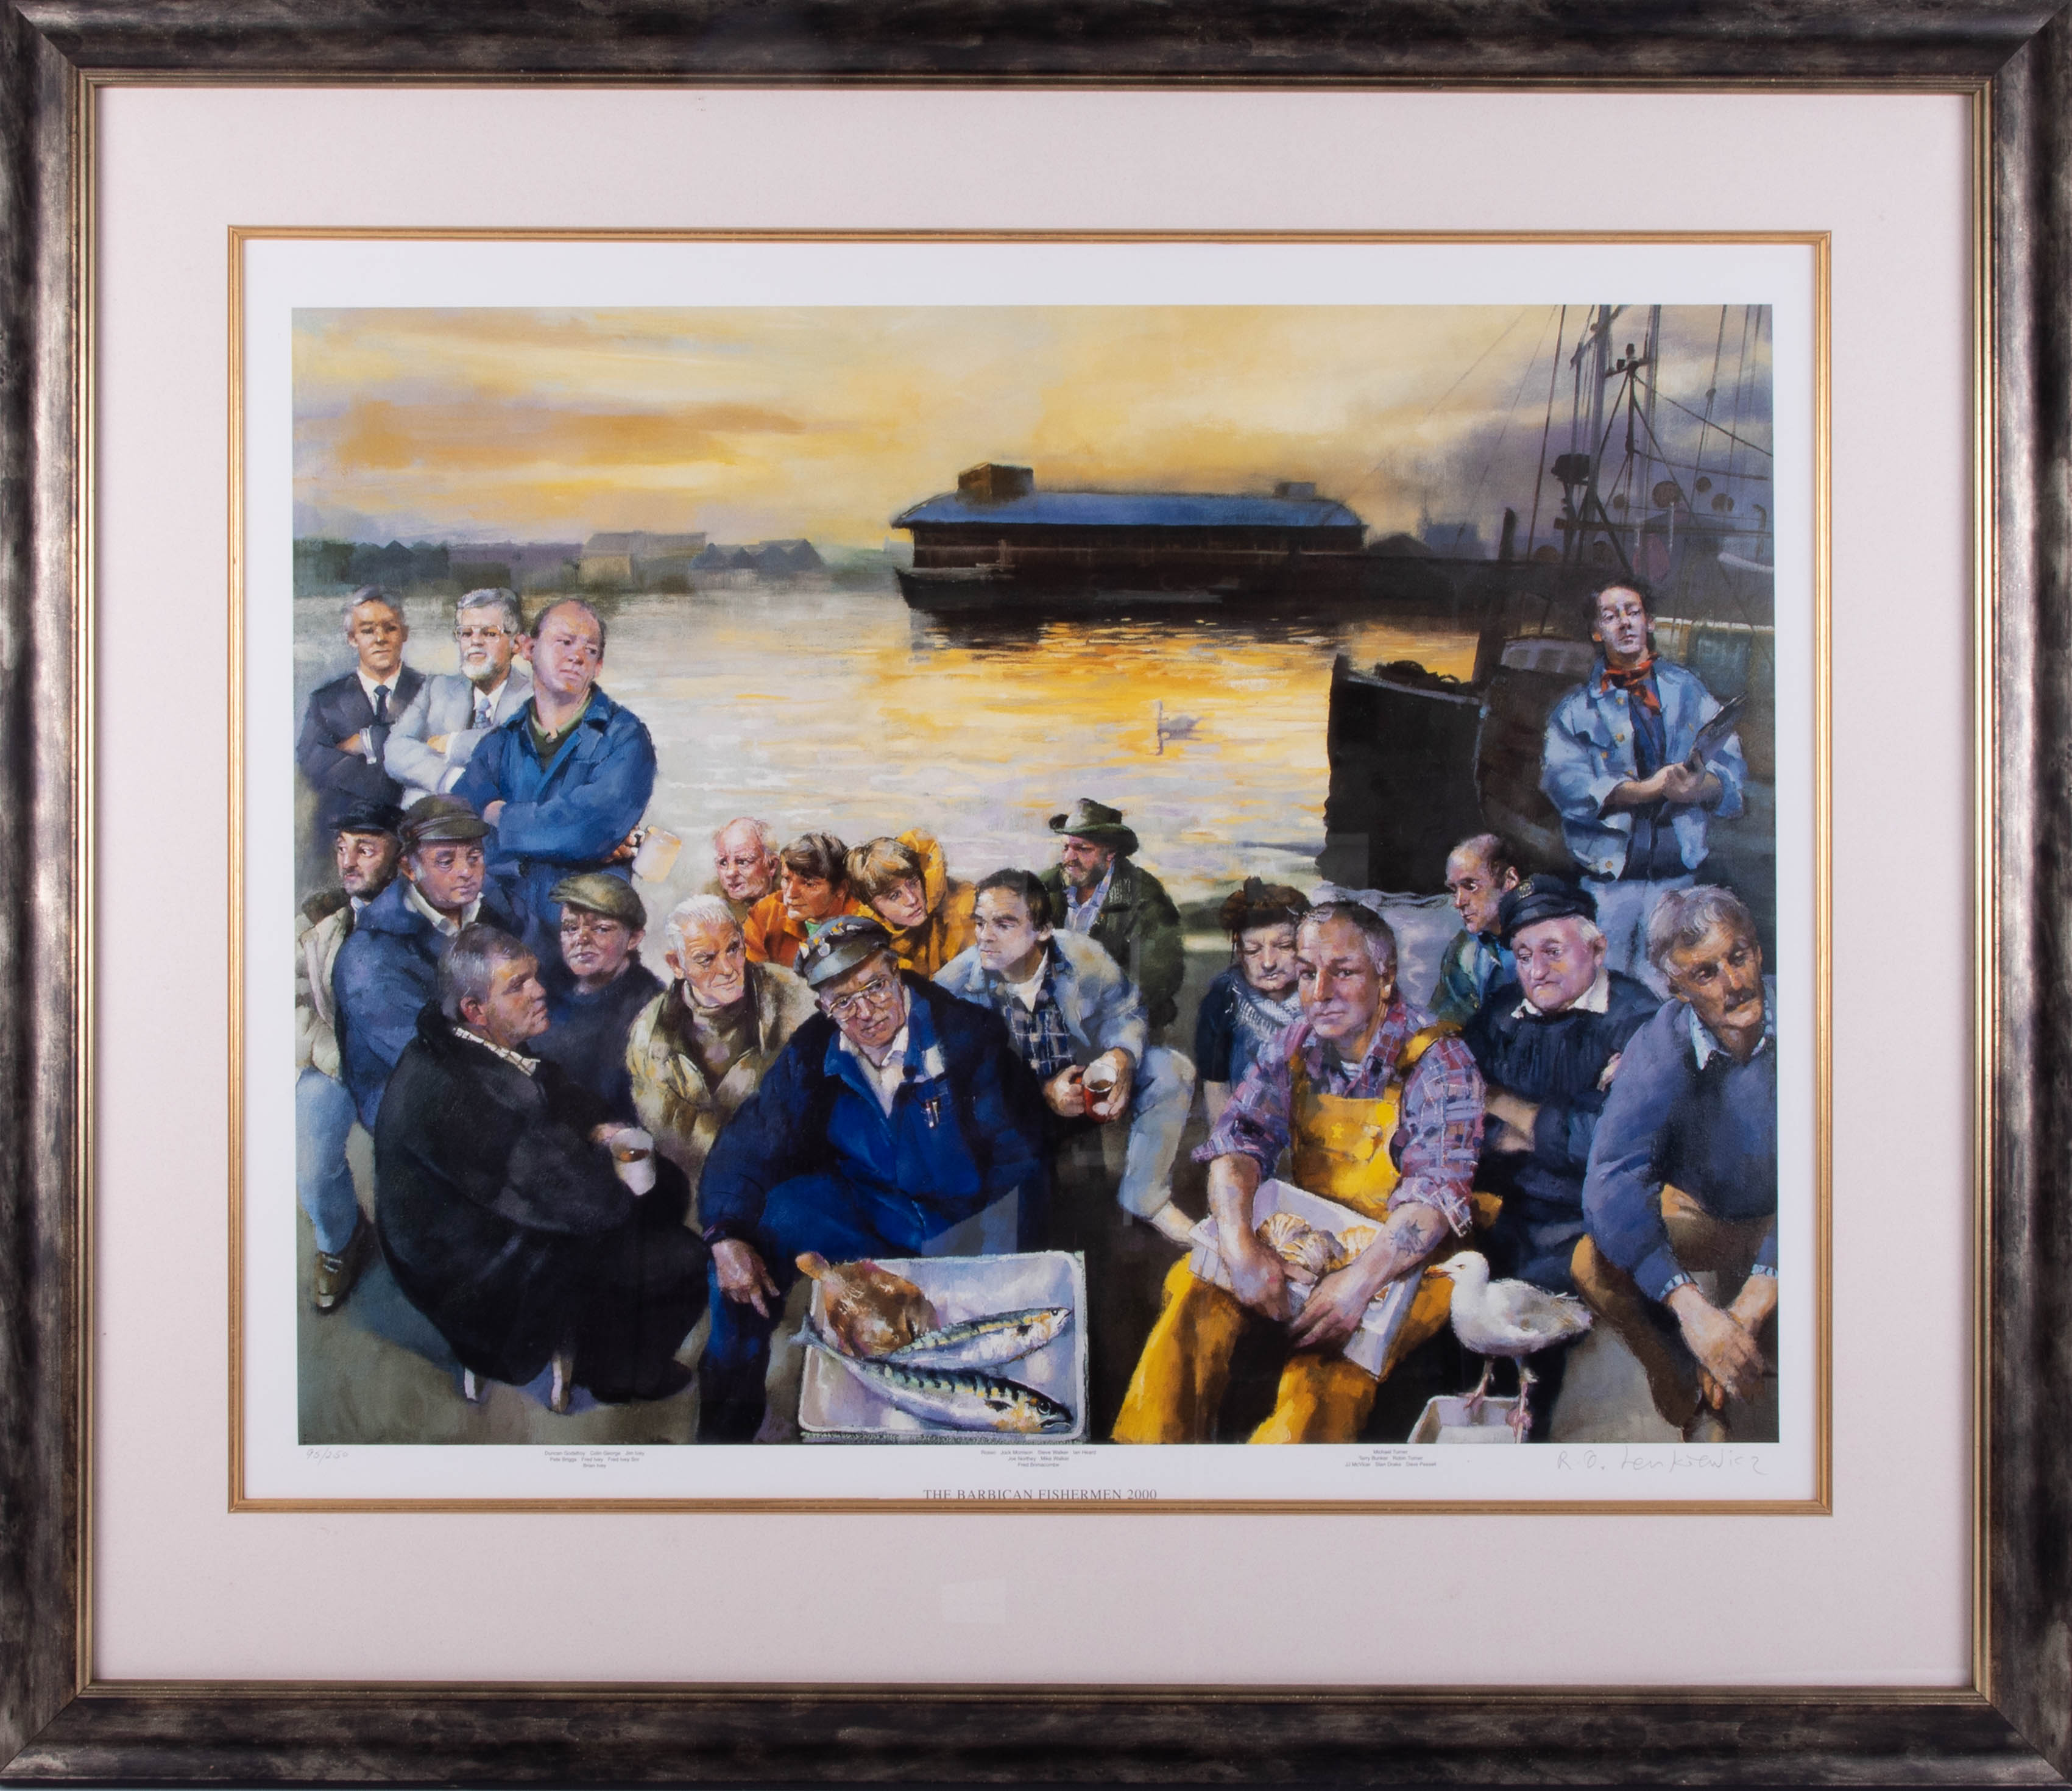 Robert Lenkiewicz, 'The Barbican Fisherman, 2000' signed edition print 95/250, 50cm x 66cm, framed